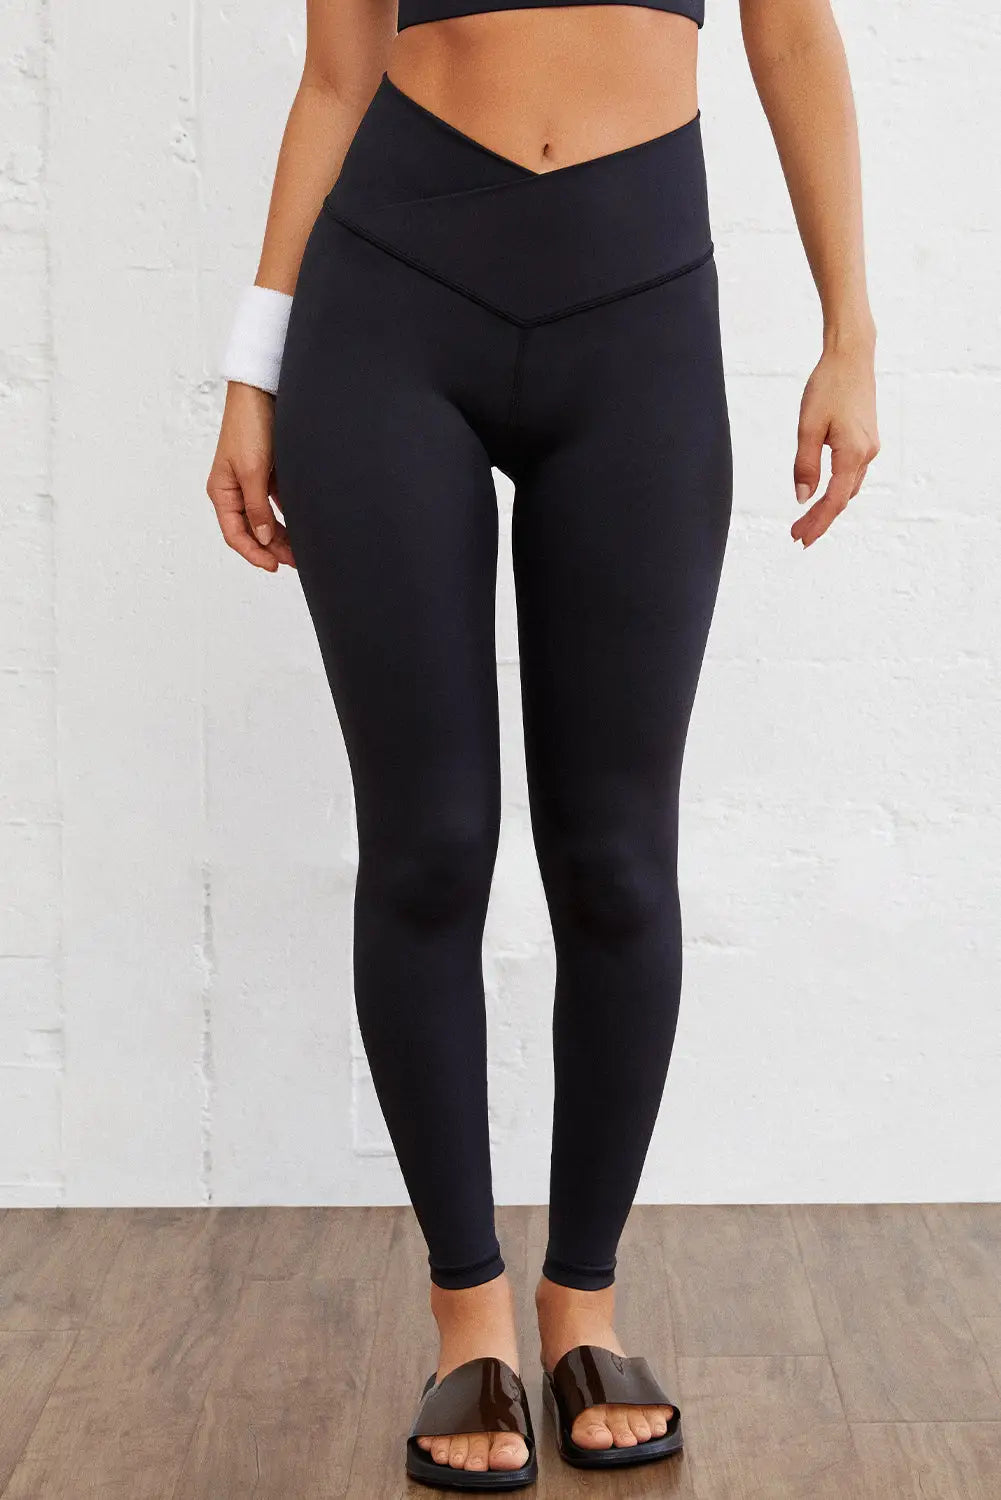 Black arched waist seamless active leggings - s / 75% polyamide + 25% elastane